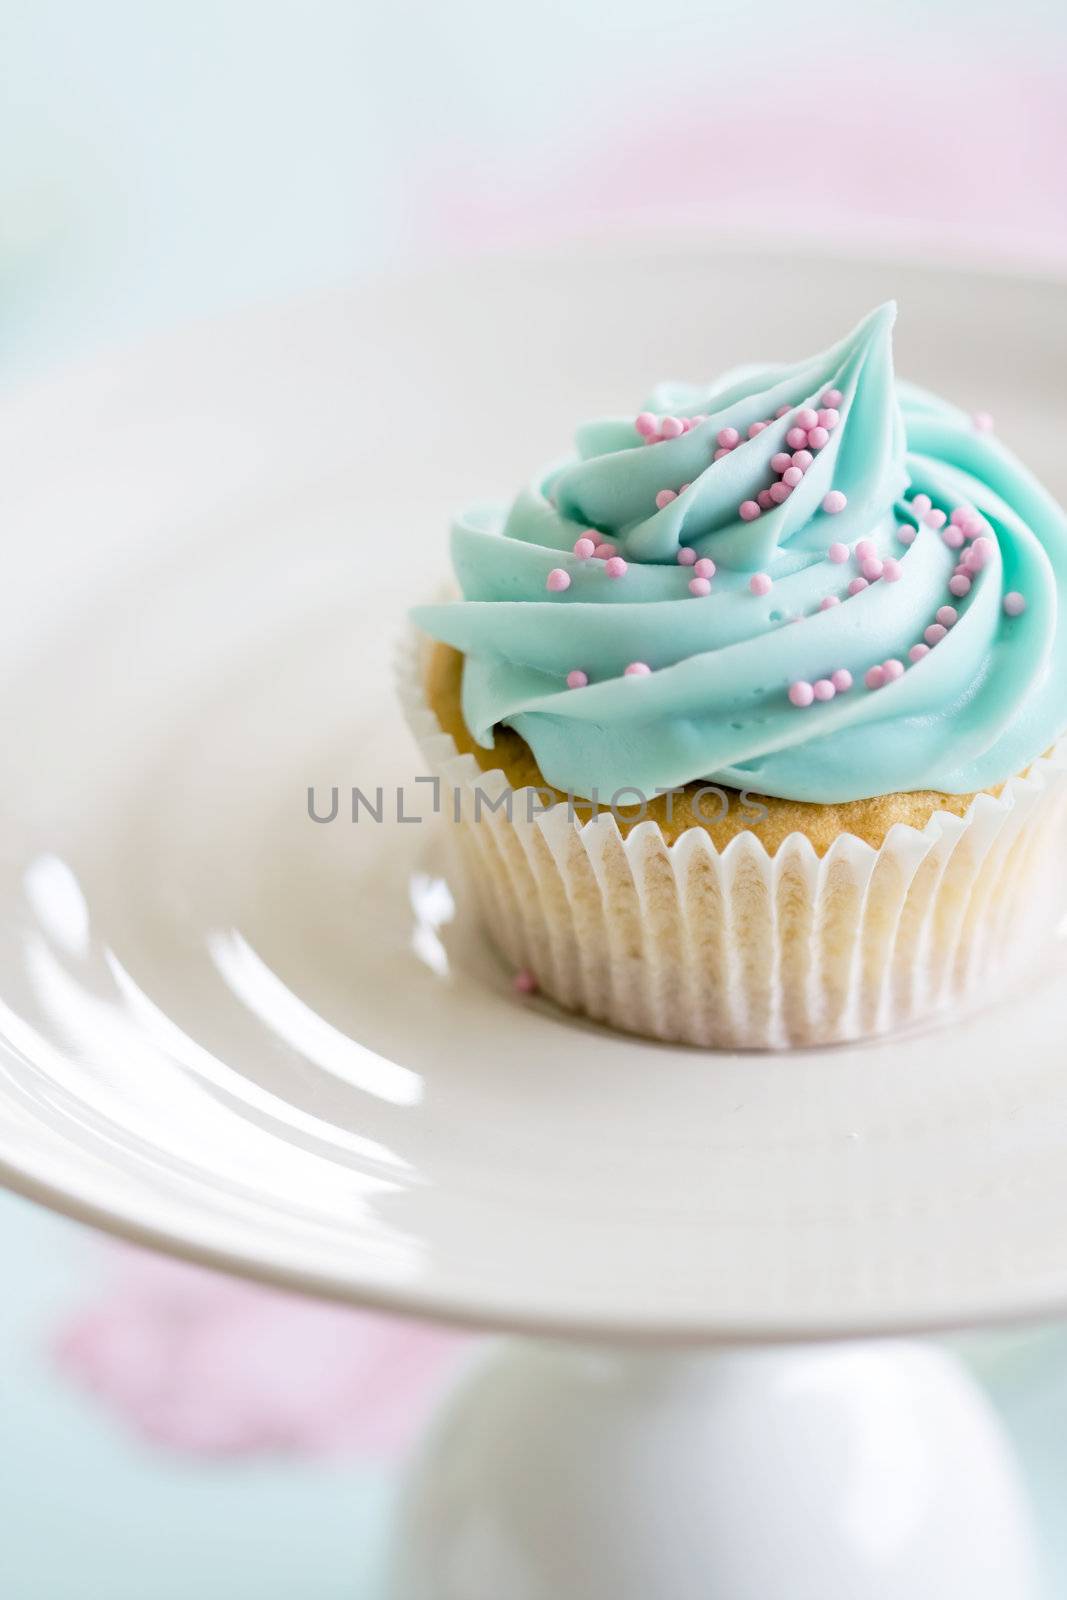 Cupcake decorated with pink sugar sprinkles